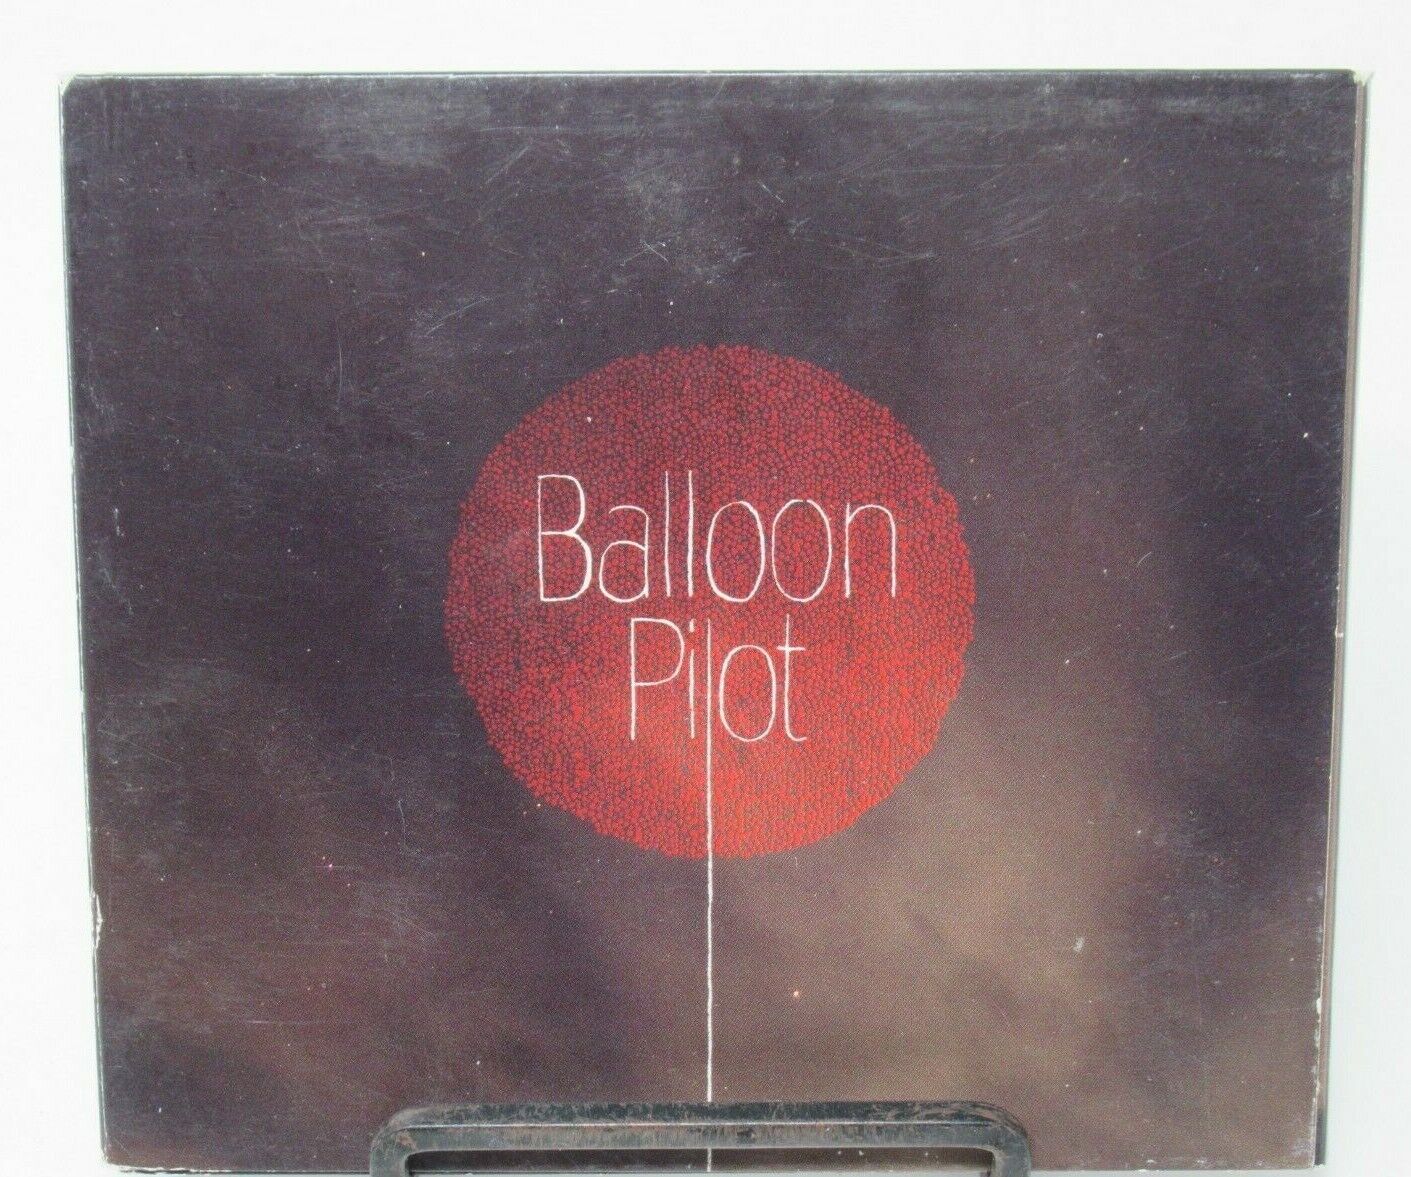 BALLOON PILOT: SELF-TITLED BALLOON PILOT MUSIC CD, 12 TRACKS, MILLAPHON RECORDS